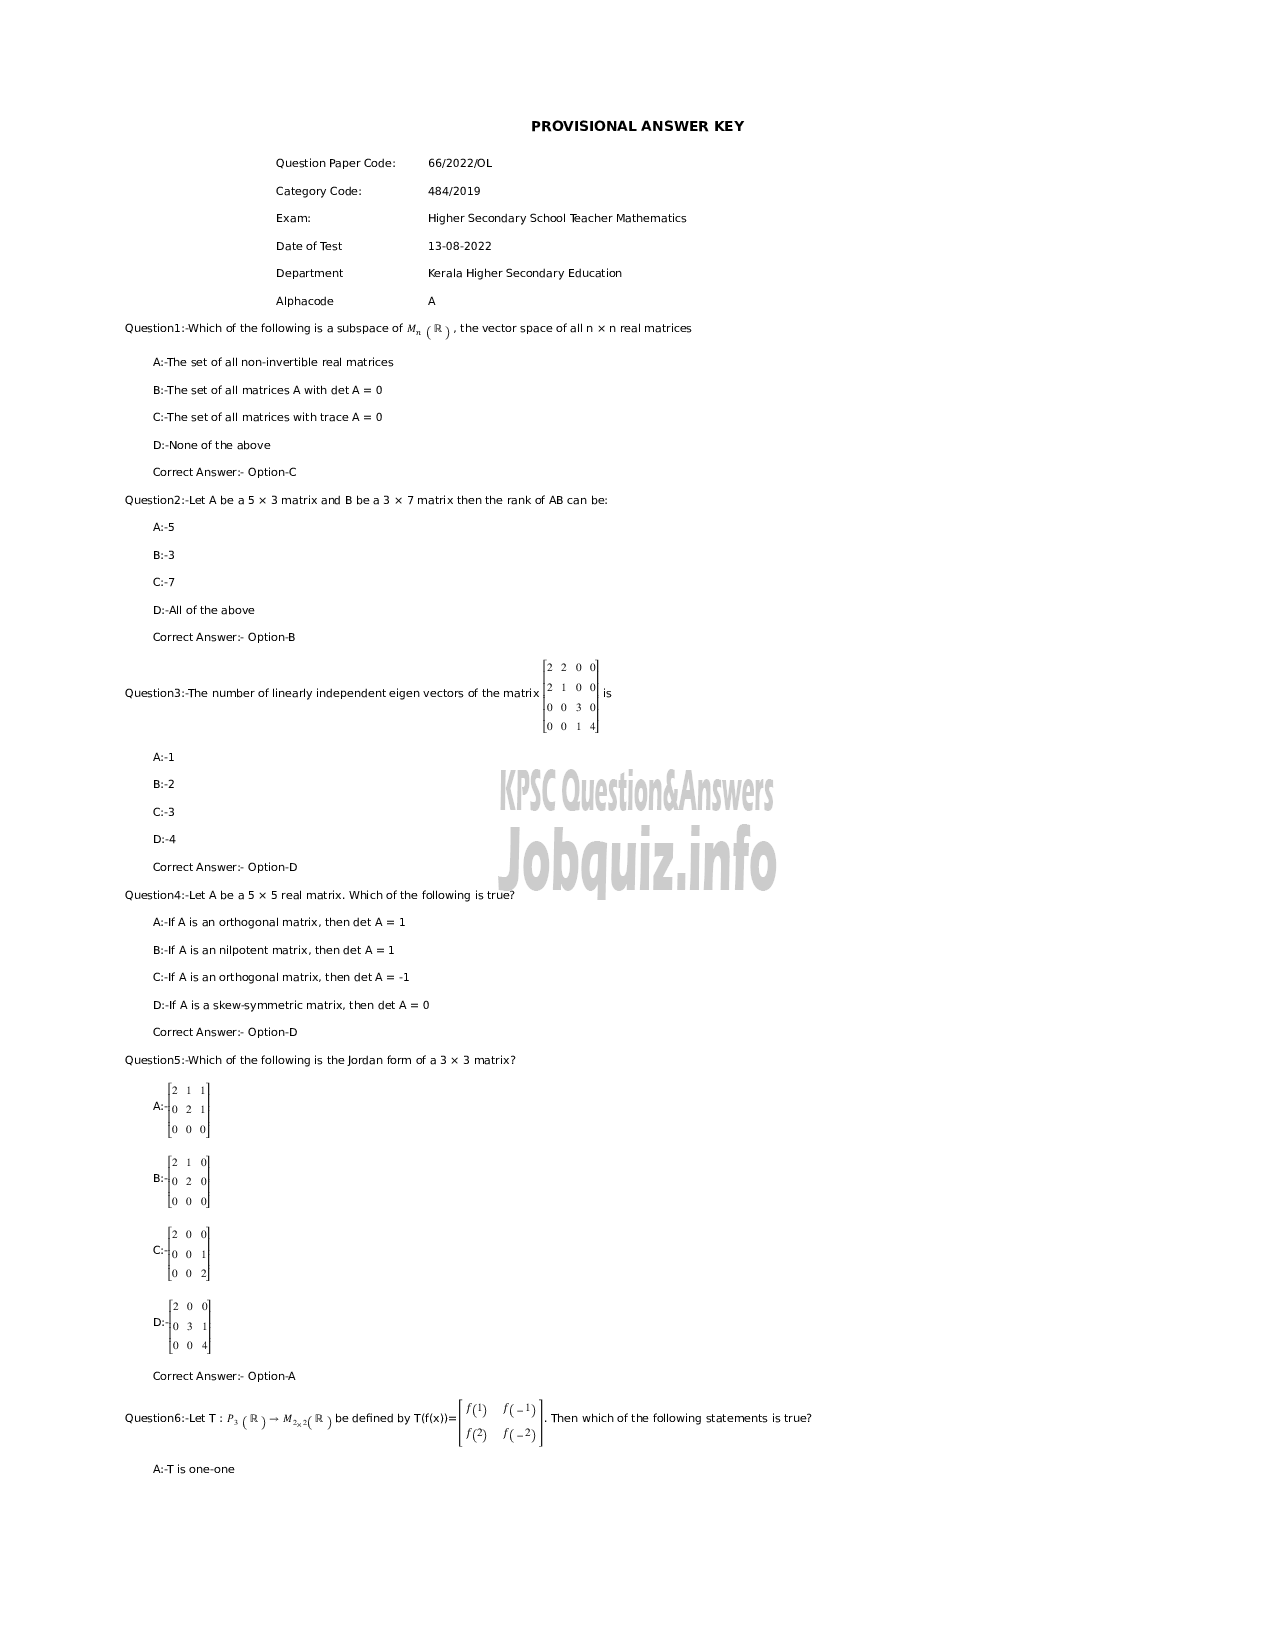 Kerala PSC Question Paper - Higher Secondary School Teacher Mathematics -  Kerala Higher Secondary Education -1